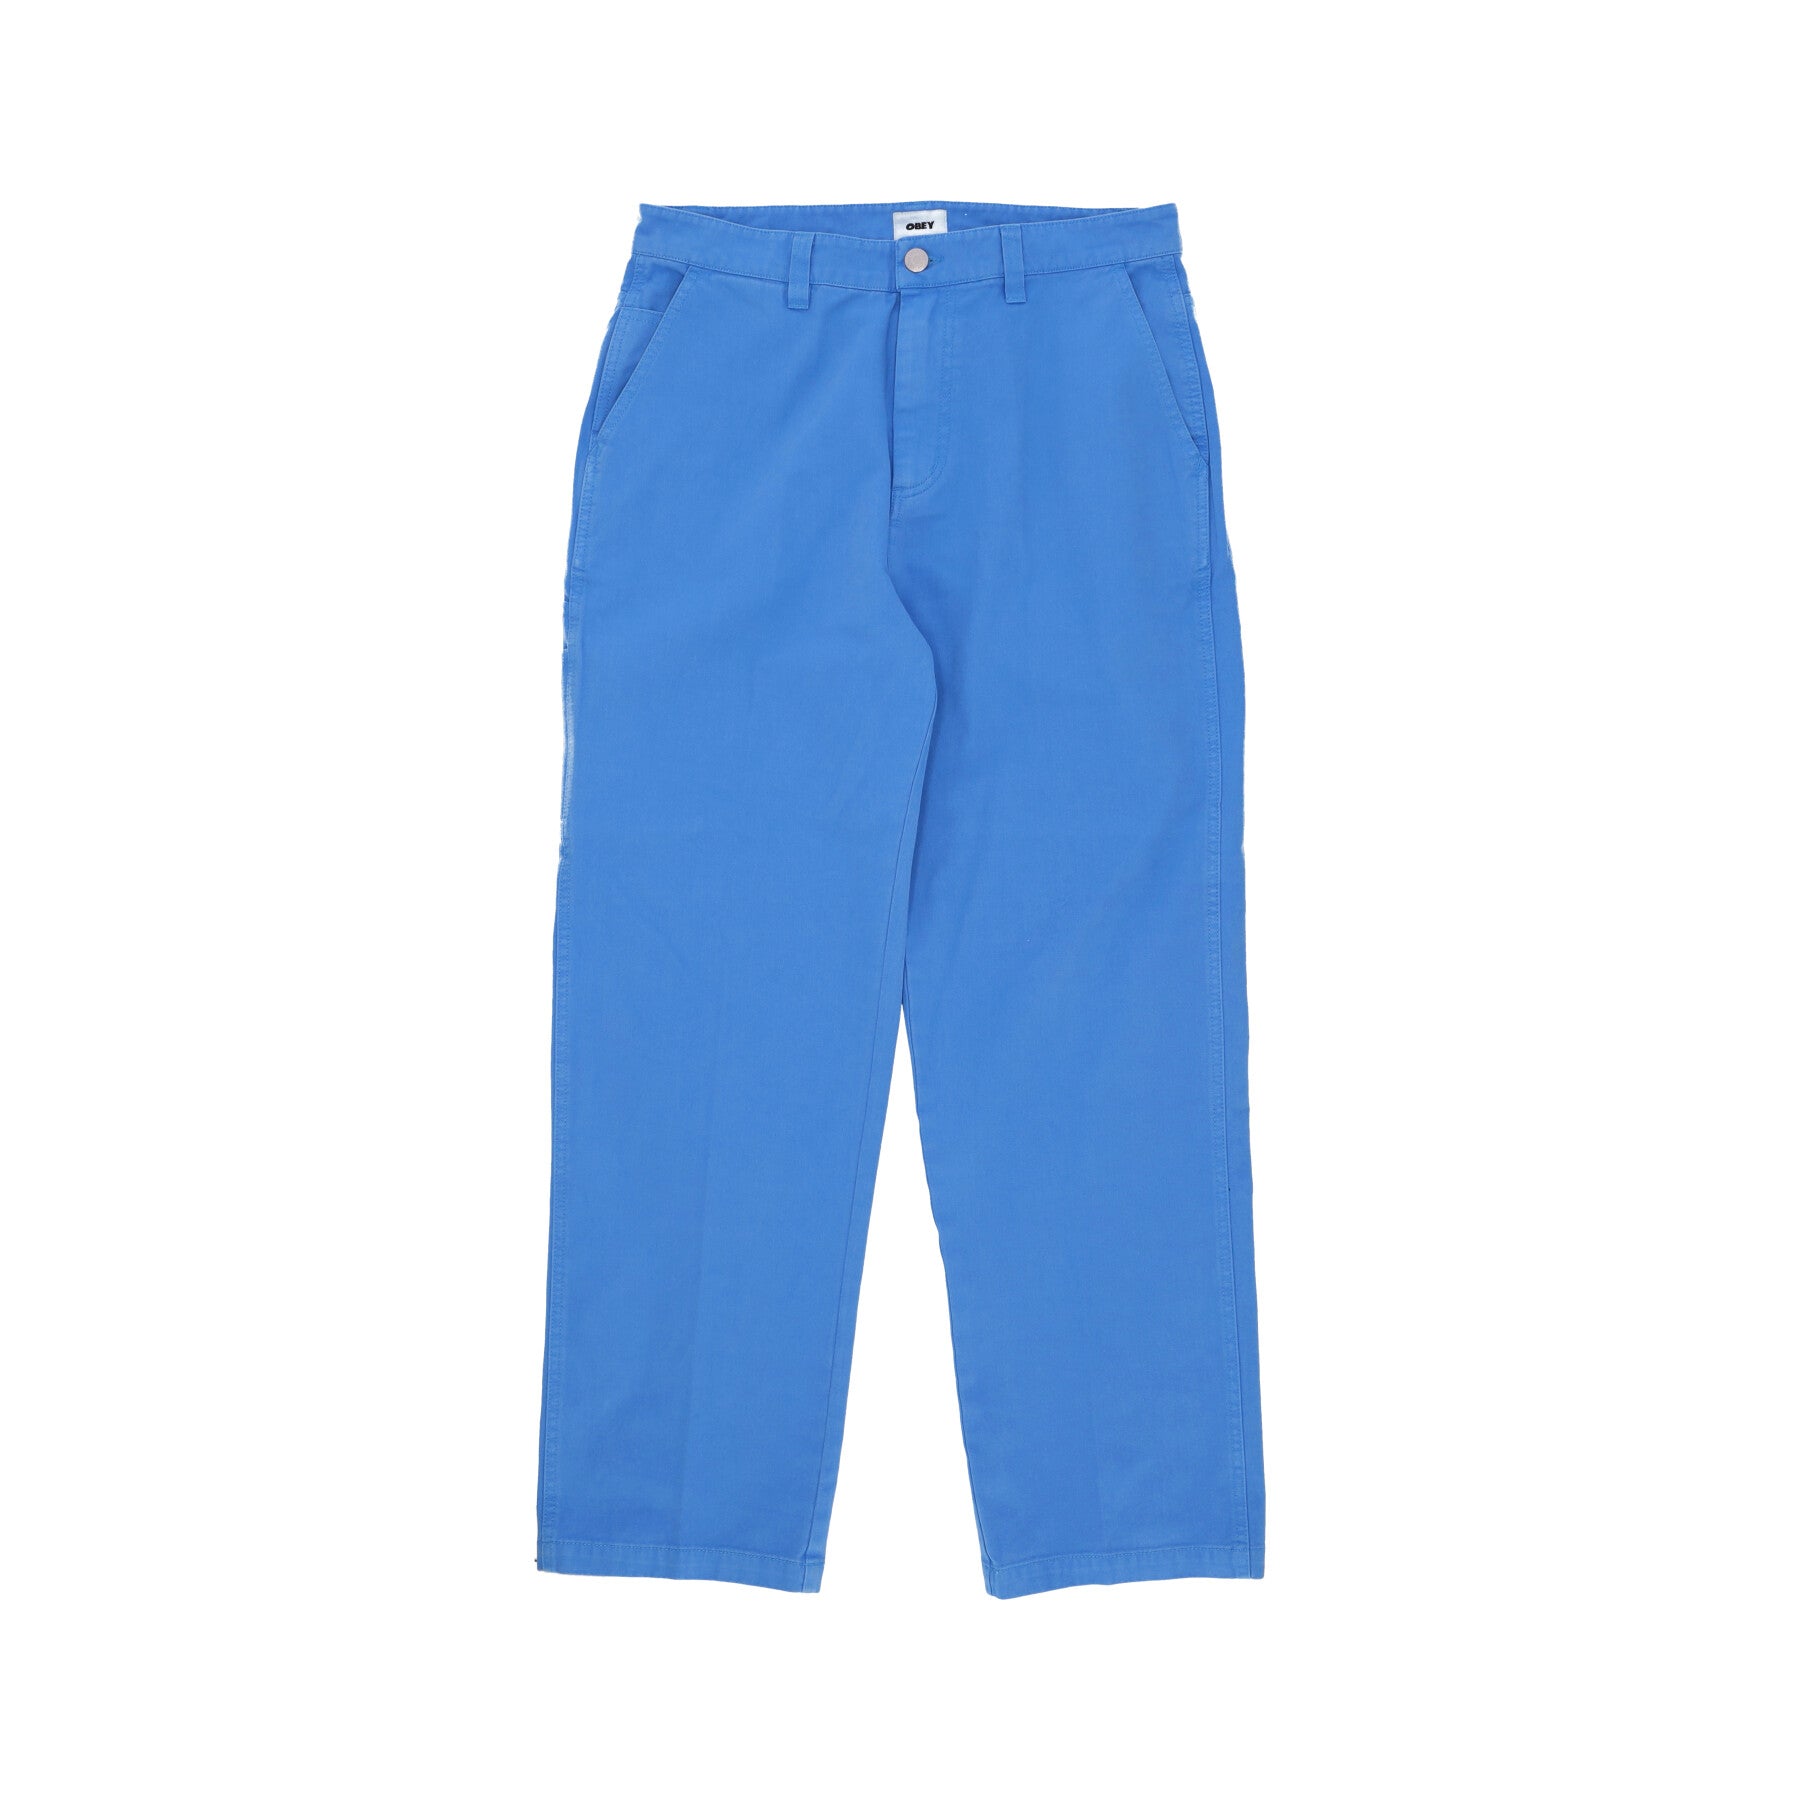 Pantalone Lungo Uomo Hardwork Pigment Carpenter Pant French Blue 142020232